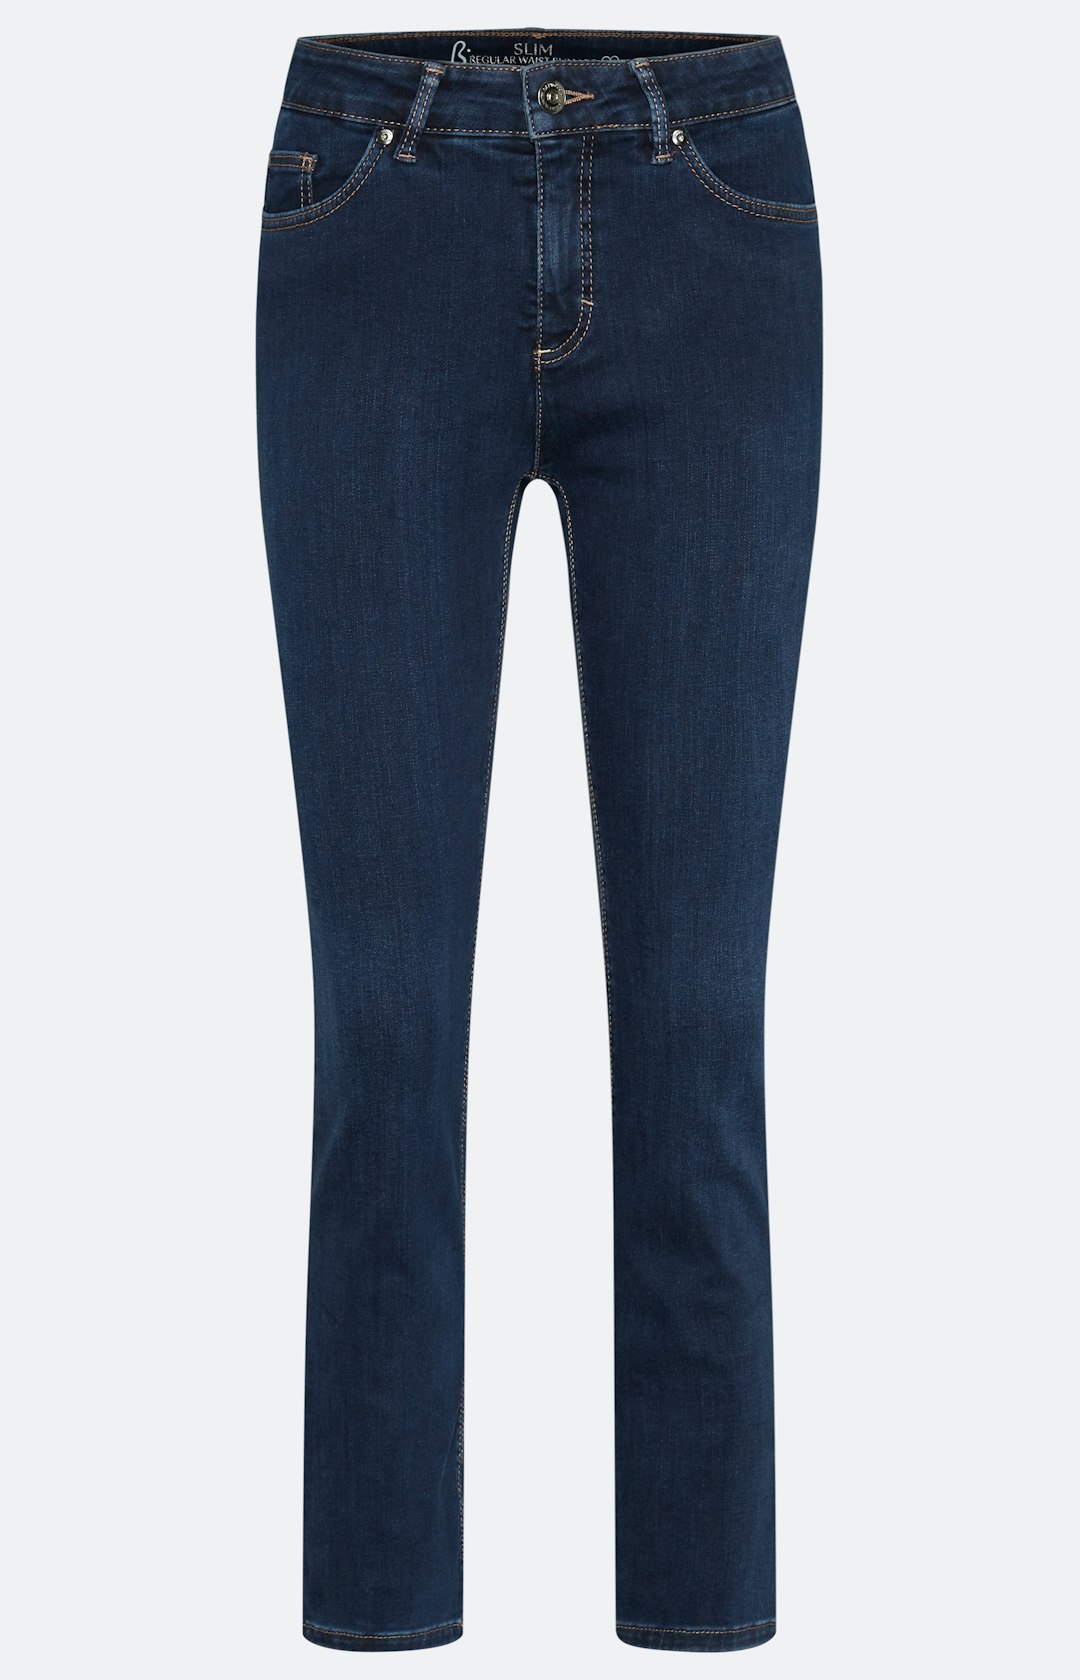 Jeans 28inch blau